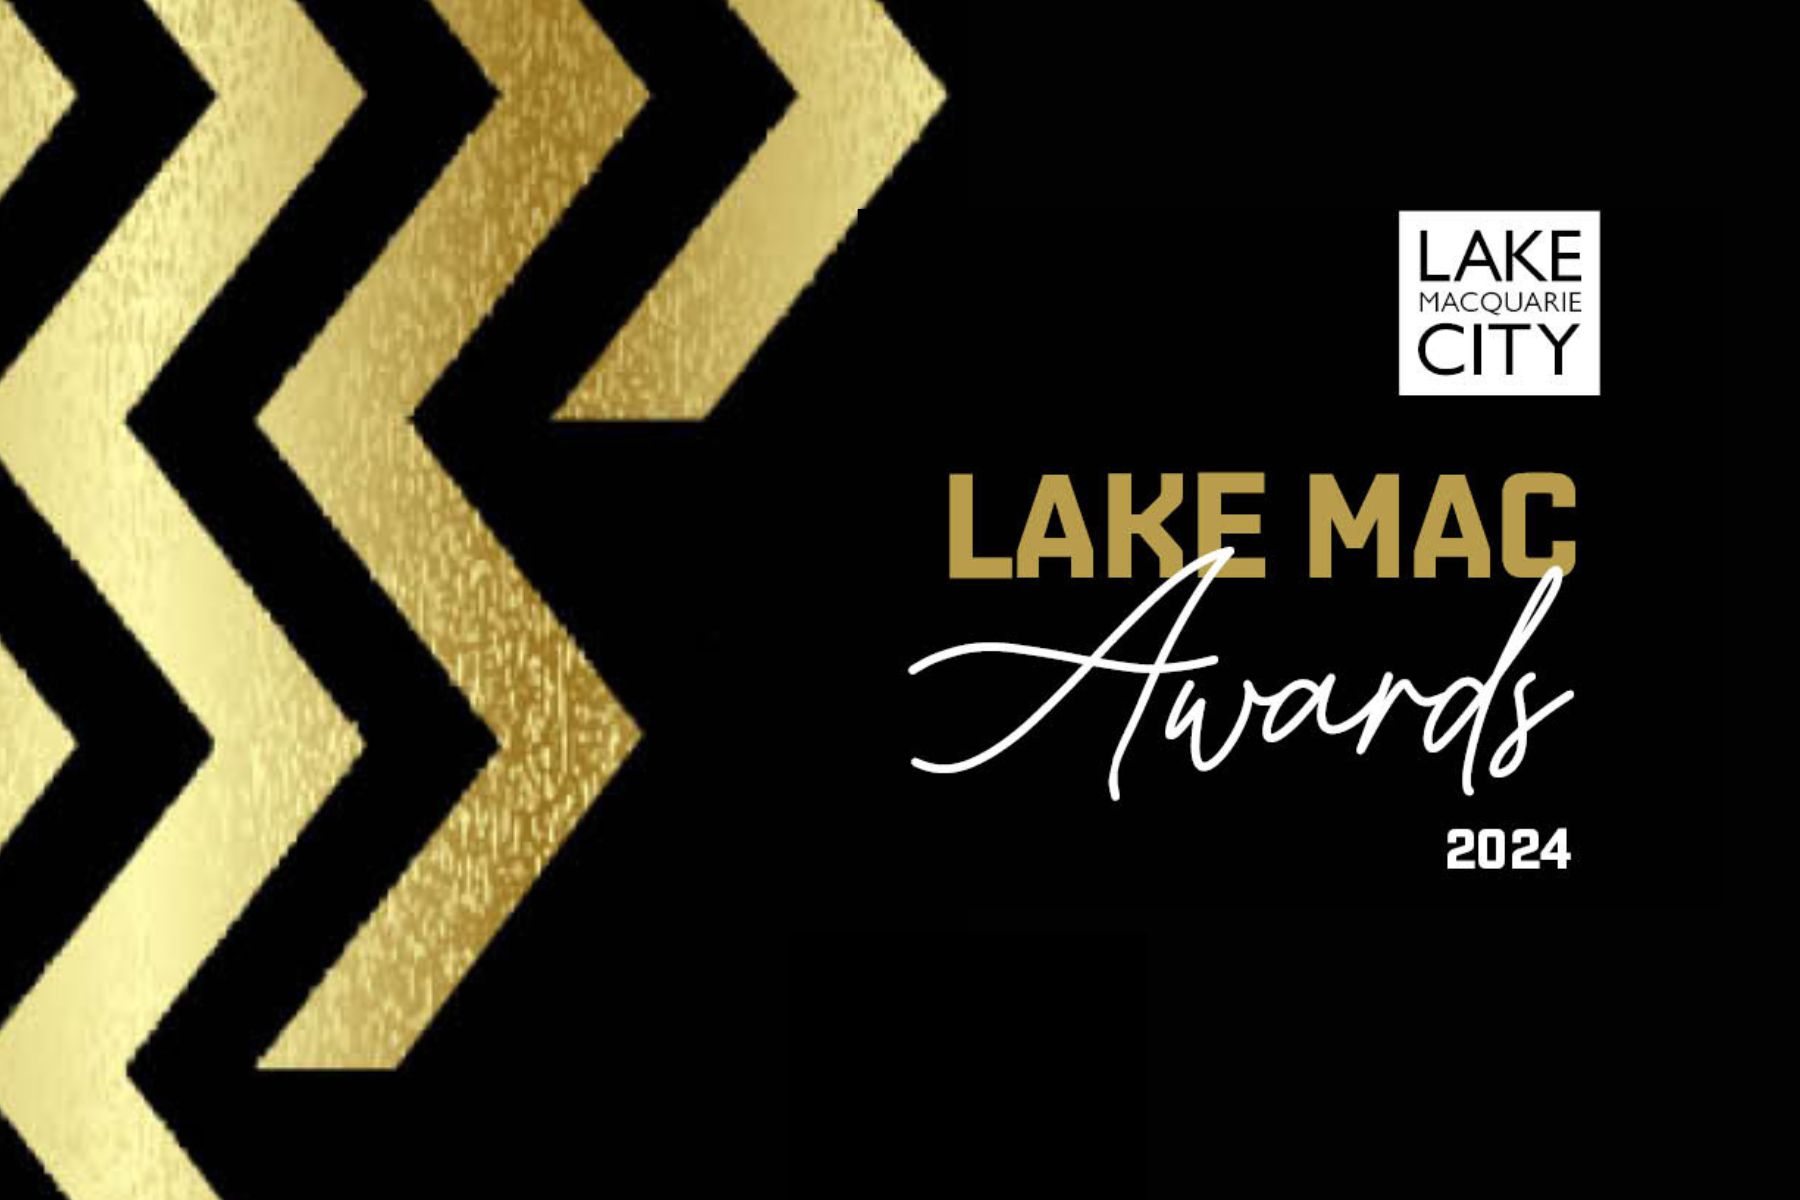 lake-mac-awards-main